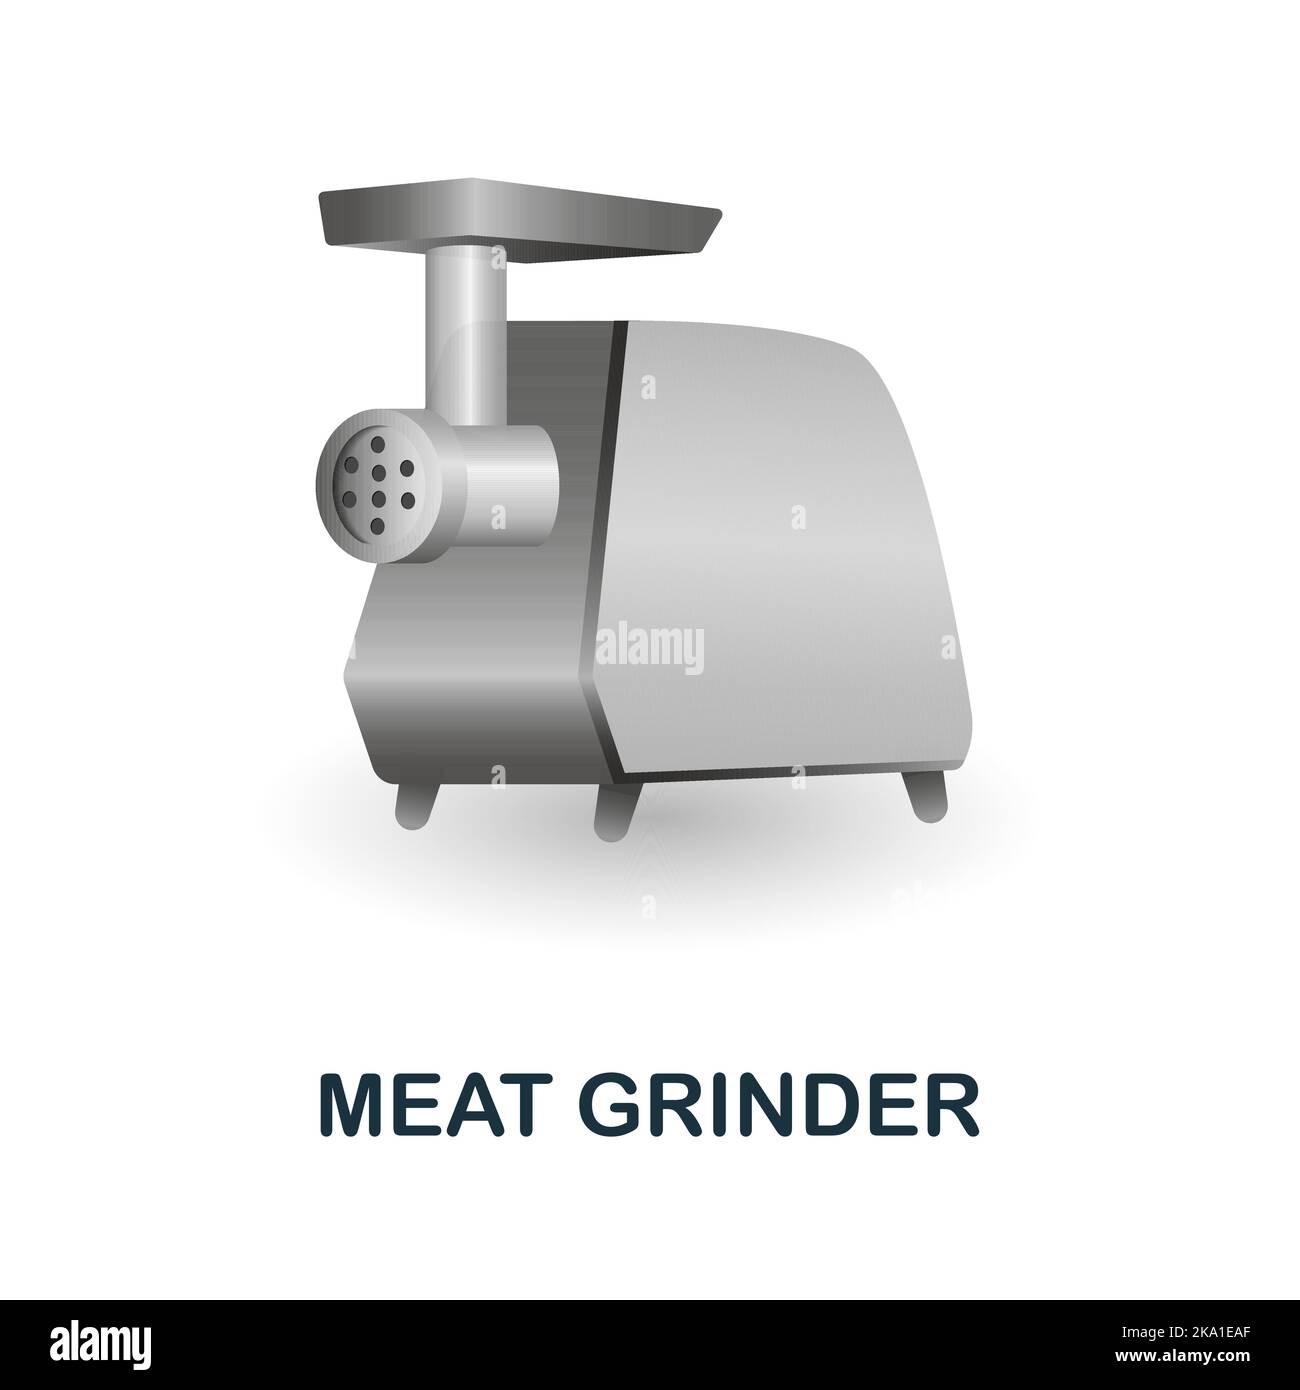 https://c8.alamy.com/comp/2KA1EAF/meat-grinder-icon-3d-illustration-from-kitchen-supplies-collection-creative-meat-grinder-3d-icon-for-web-design-templates-infographics-and-more-2KA1EAF.jpg